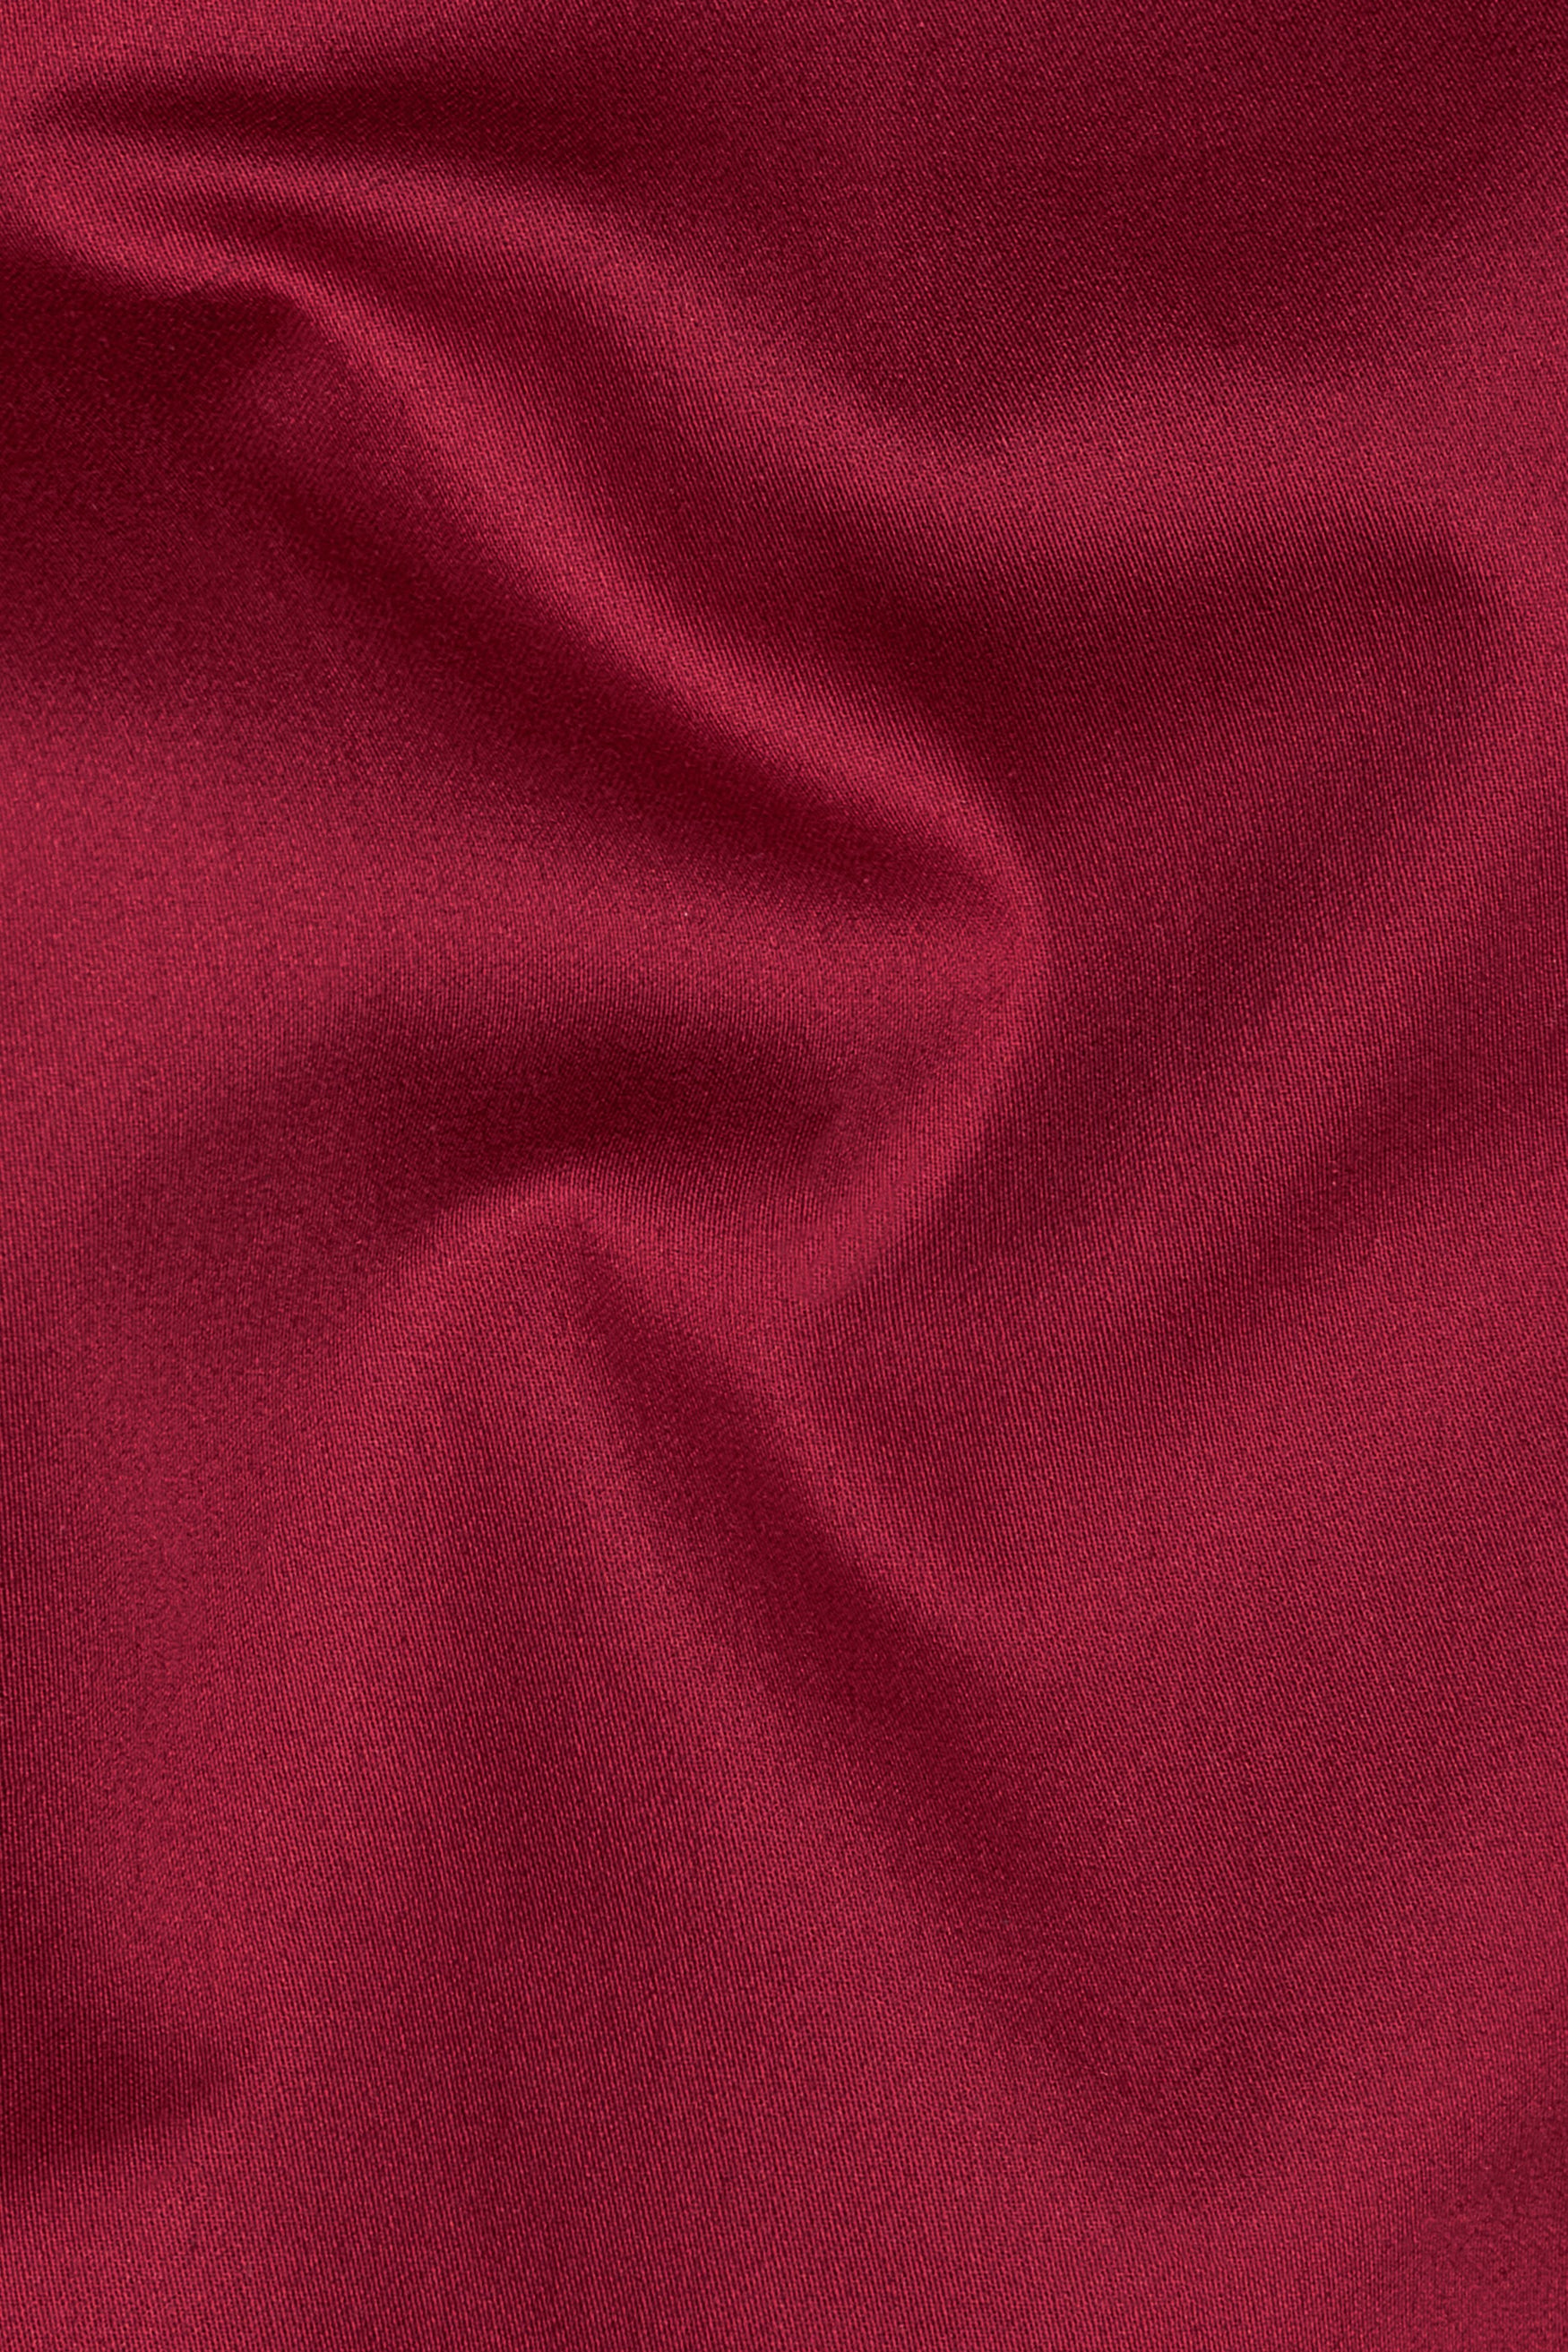 Vivid Auburn Red Subtle Sheen Super Soft Premium Cotton Kurta